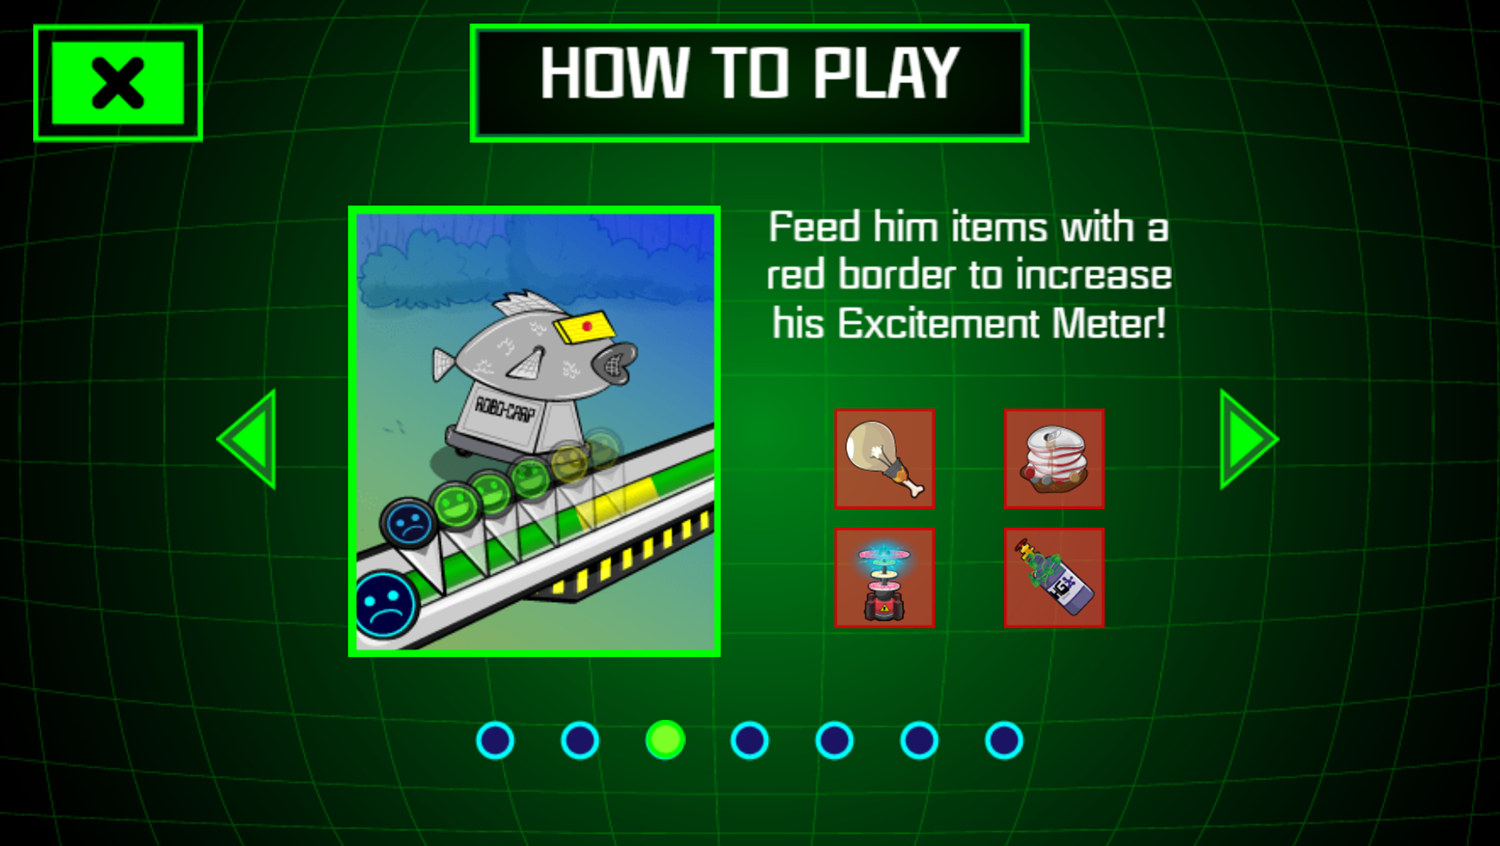 Robo-Carpe Diem Game How To Play Screenshot.